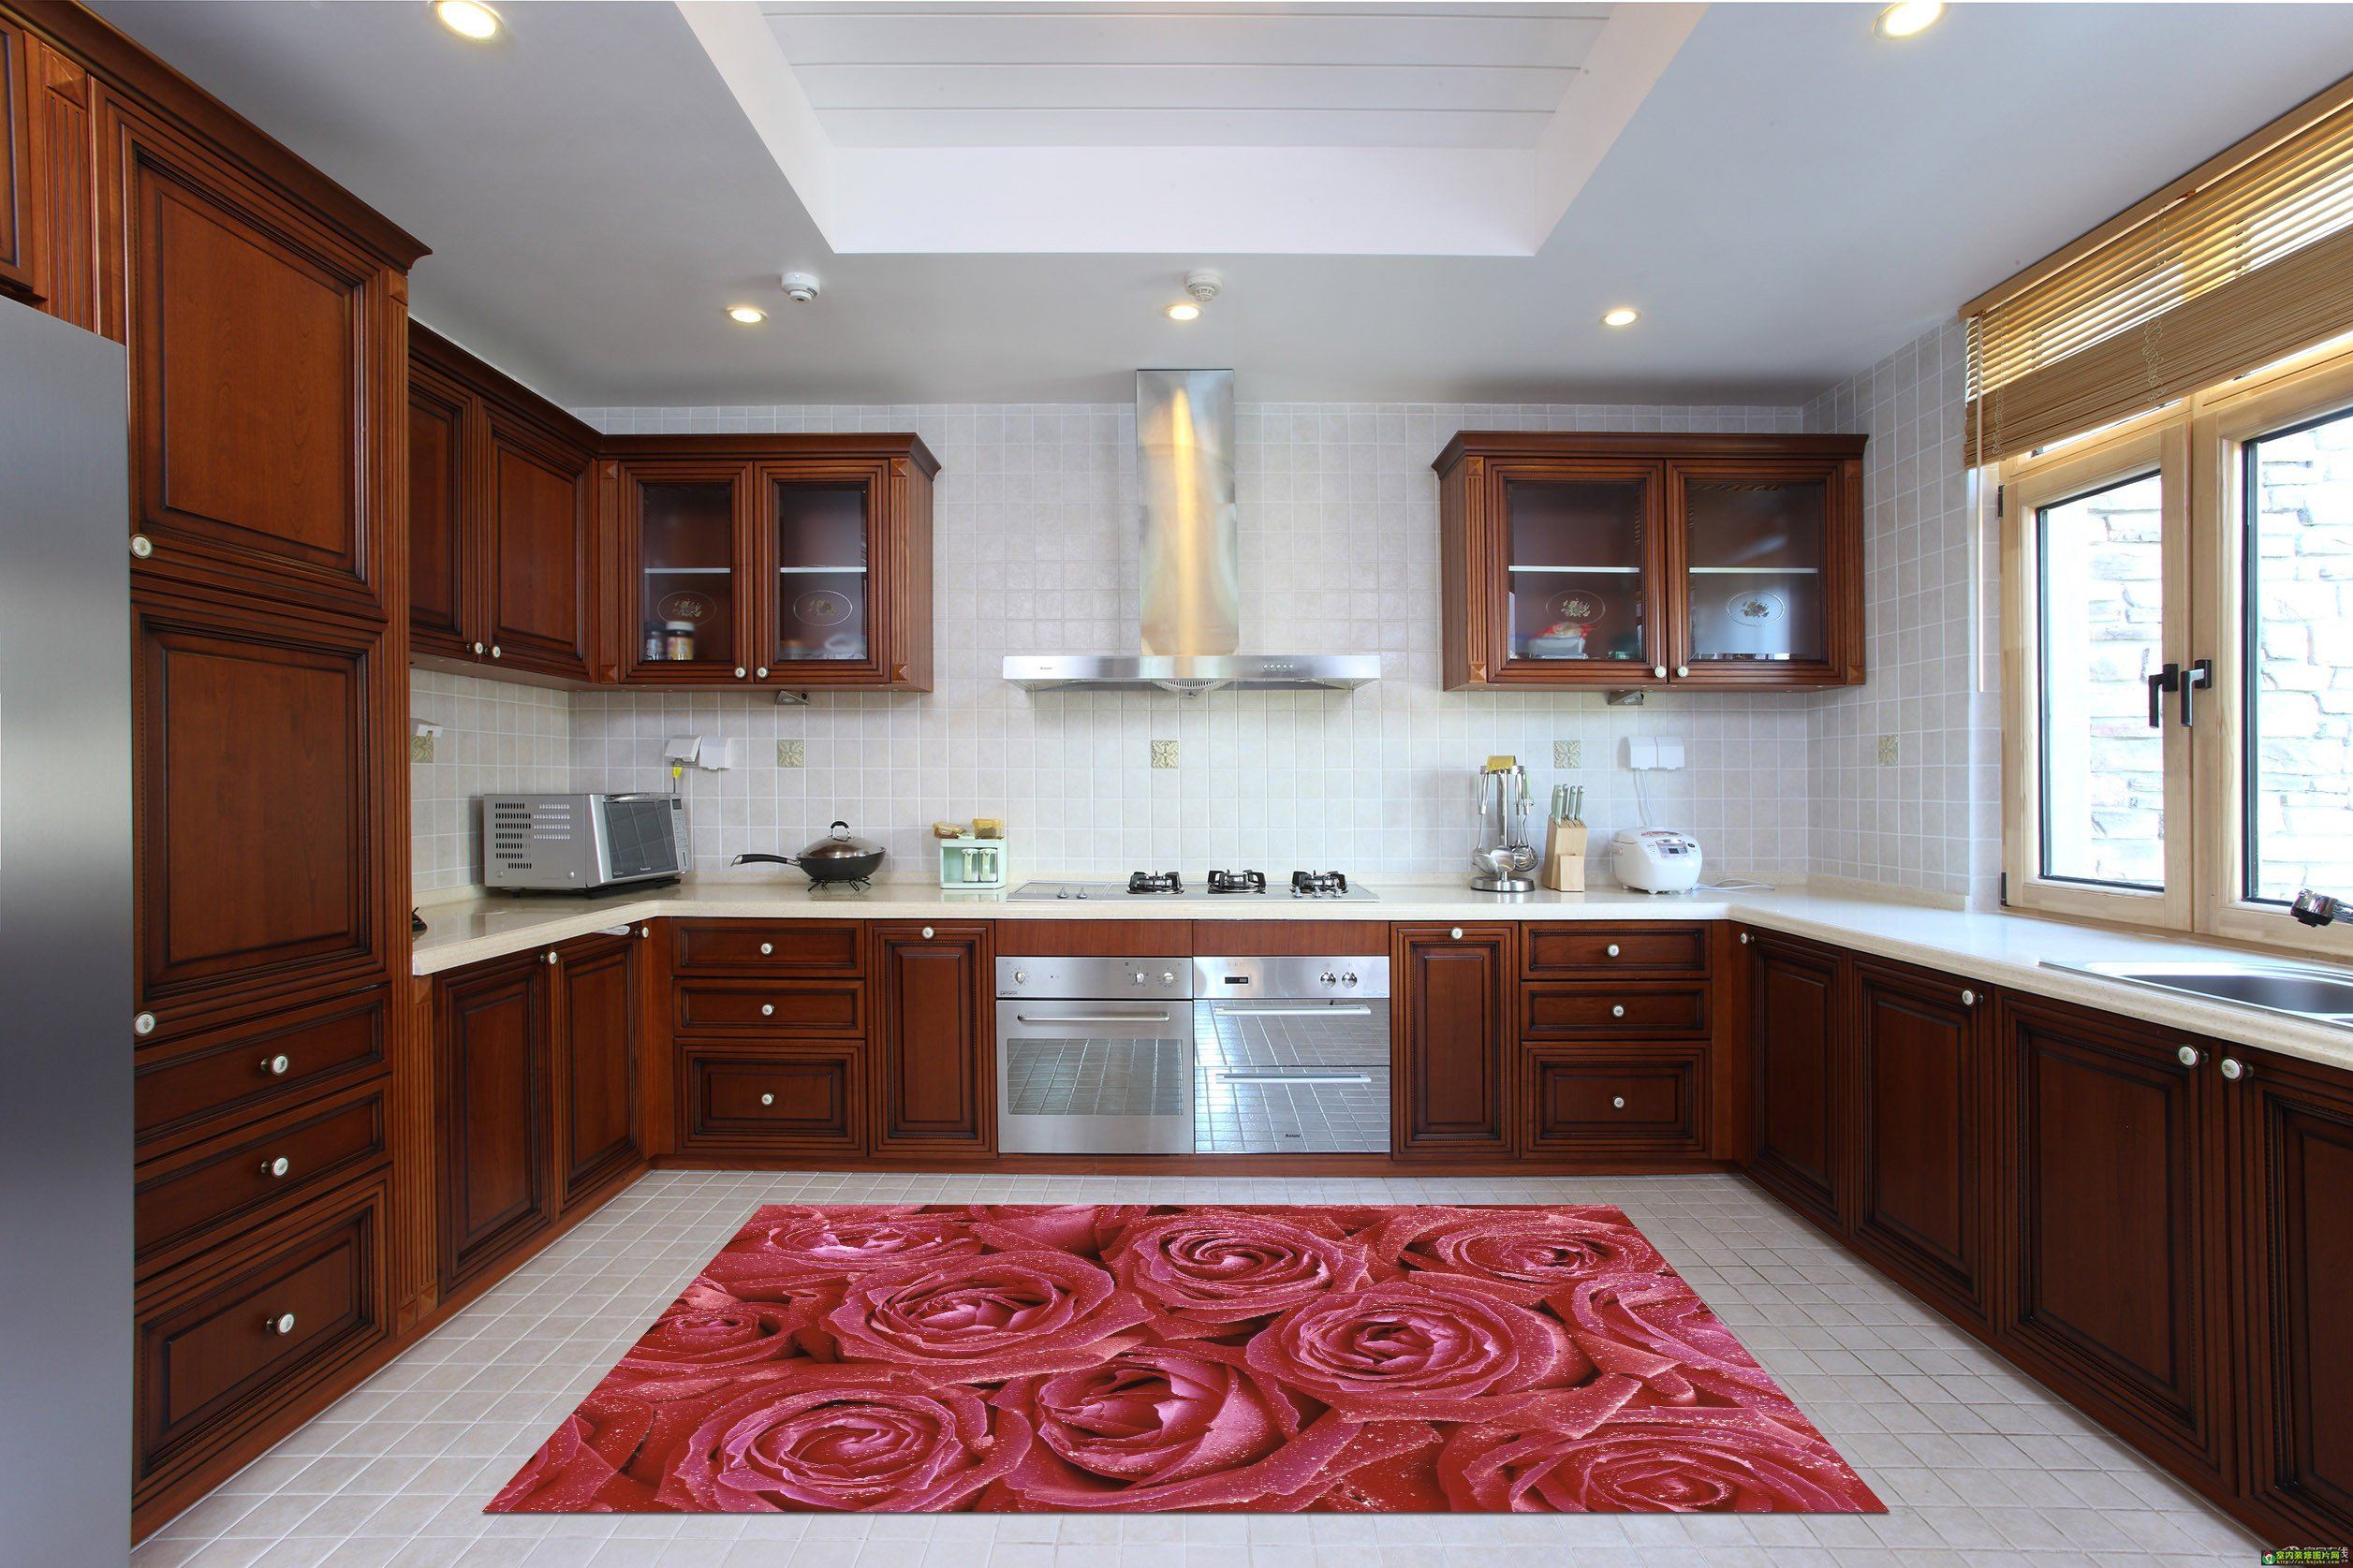 3D Roses Dews Kitchen Mat Floor Mural Wallpaper AJ Wallpaper 